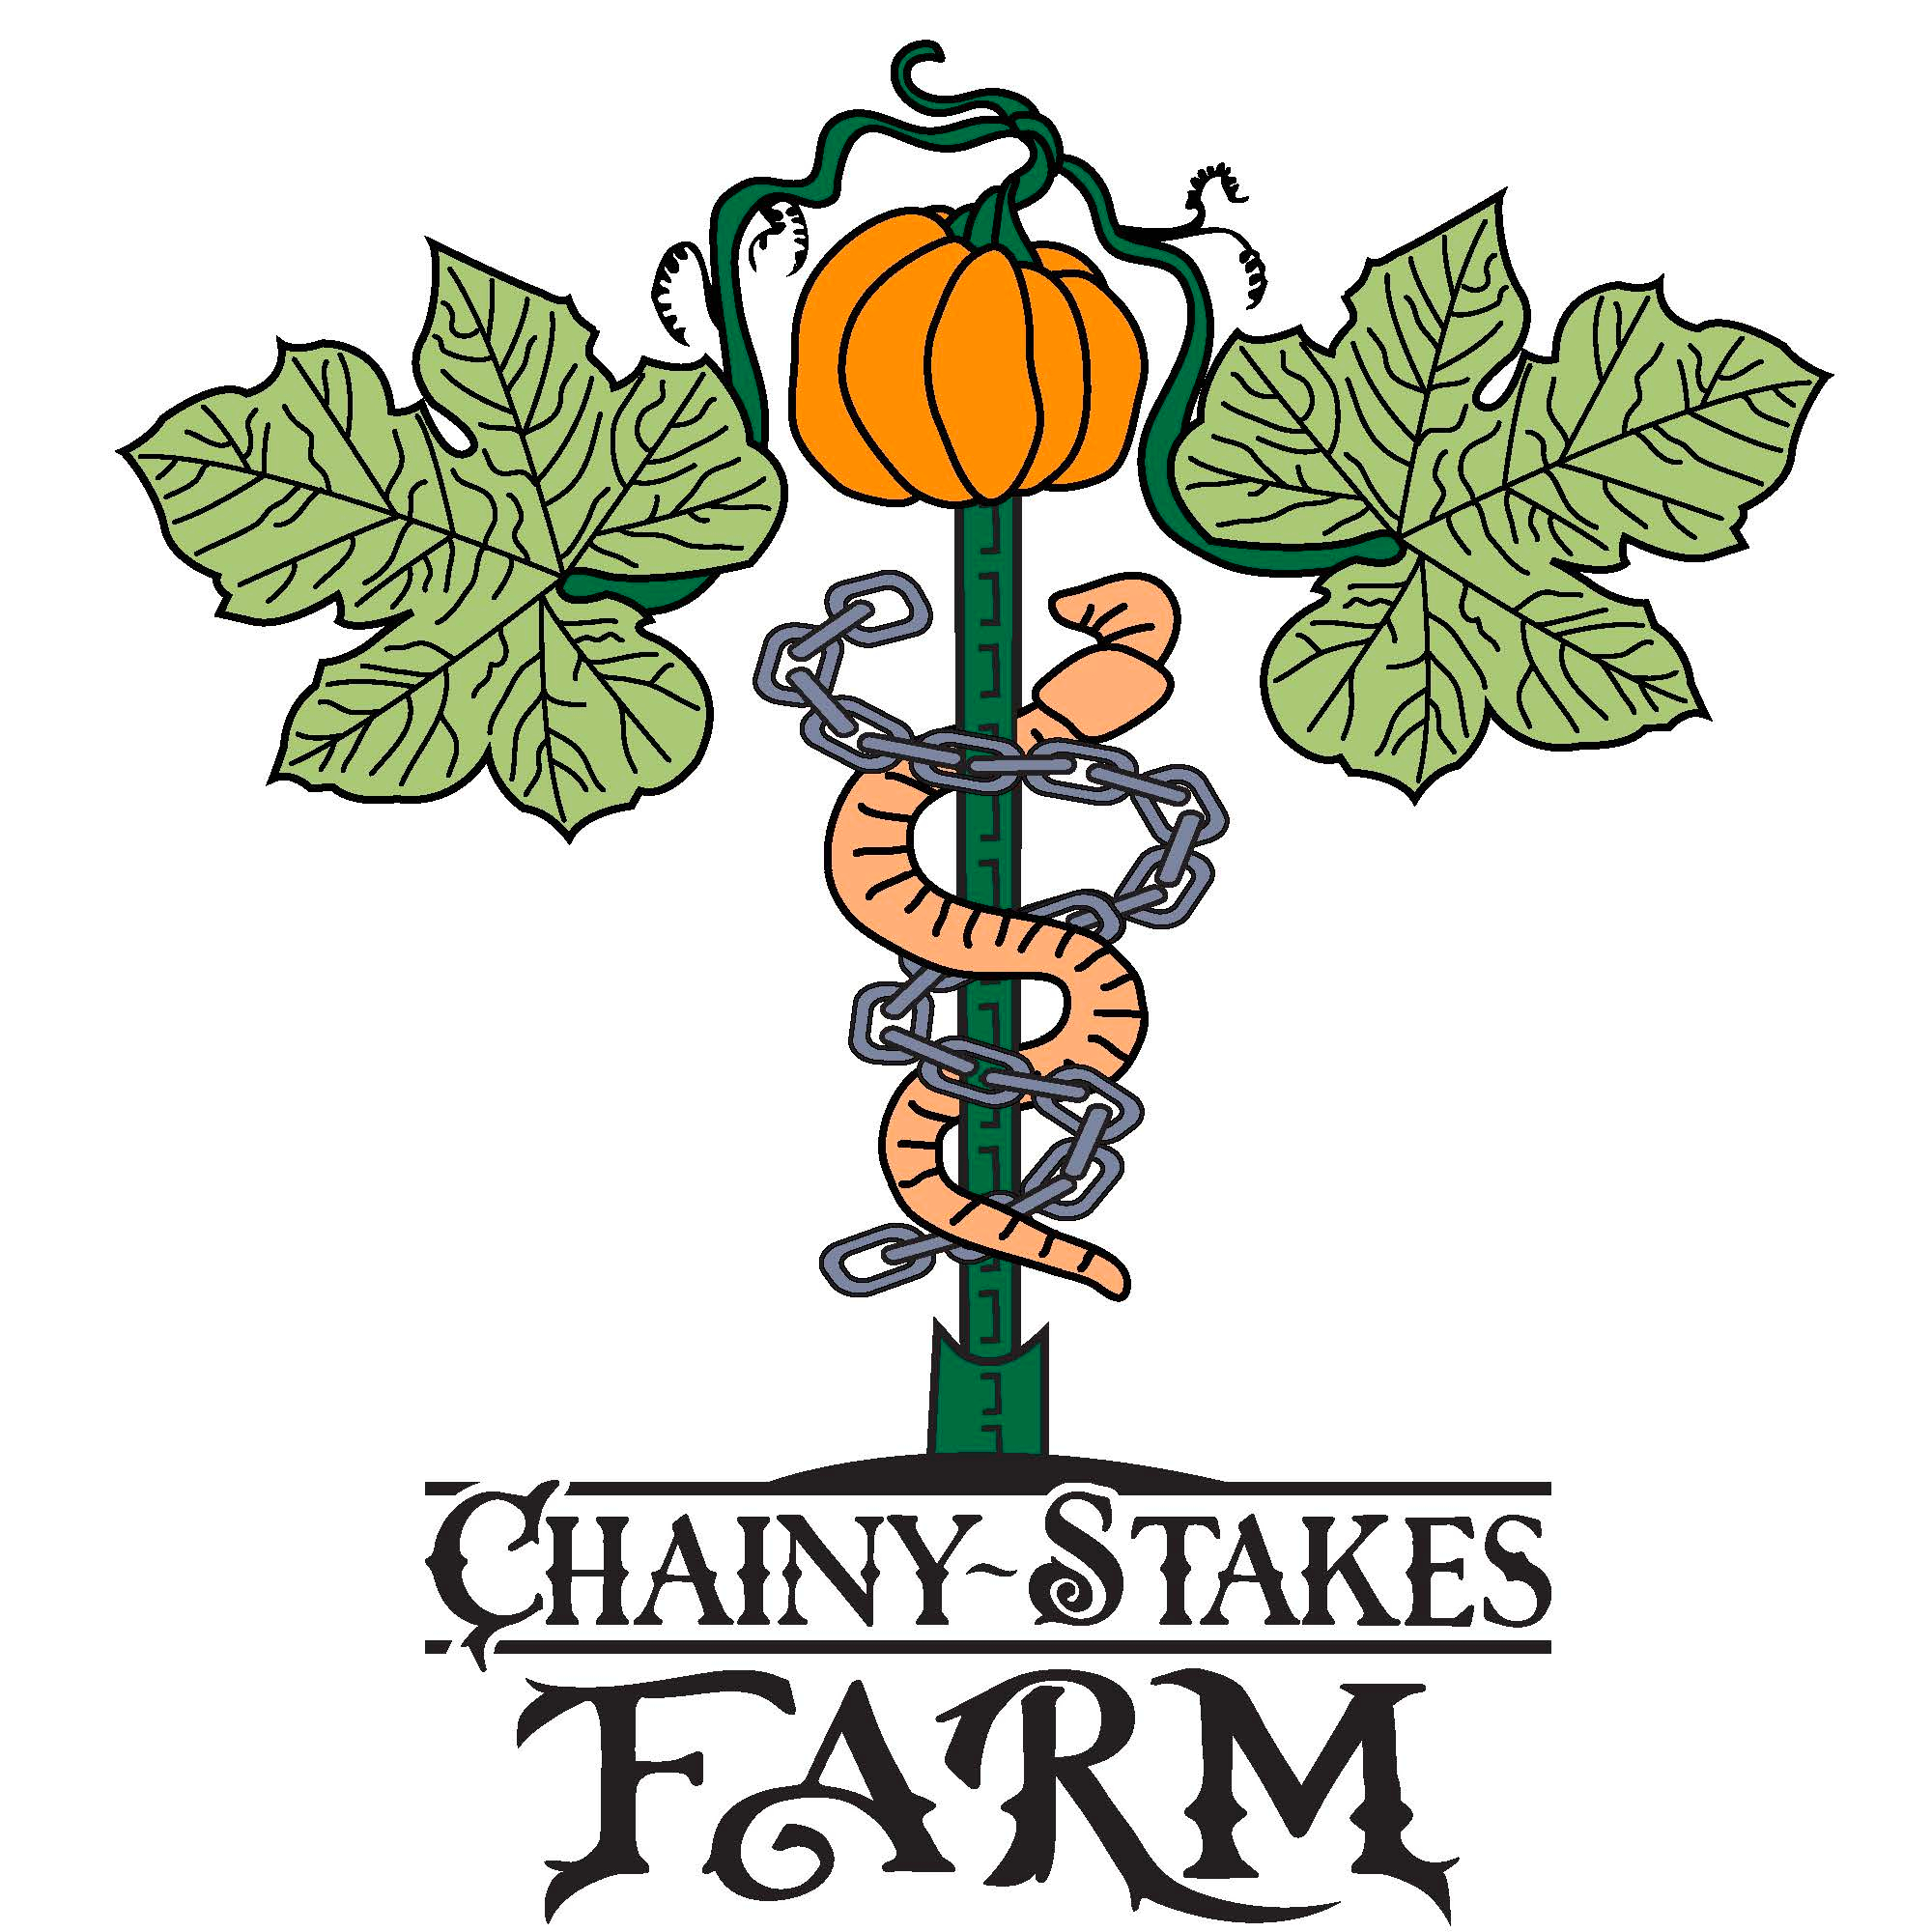 Chainy-Stakes Farm